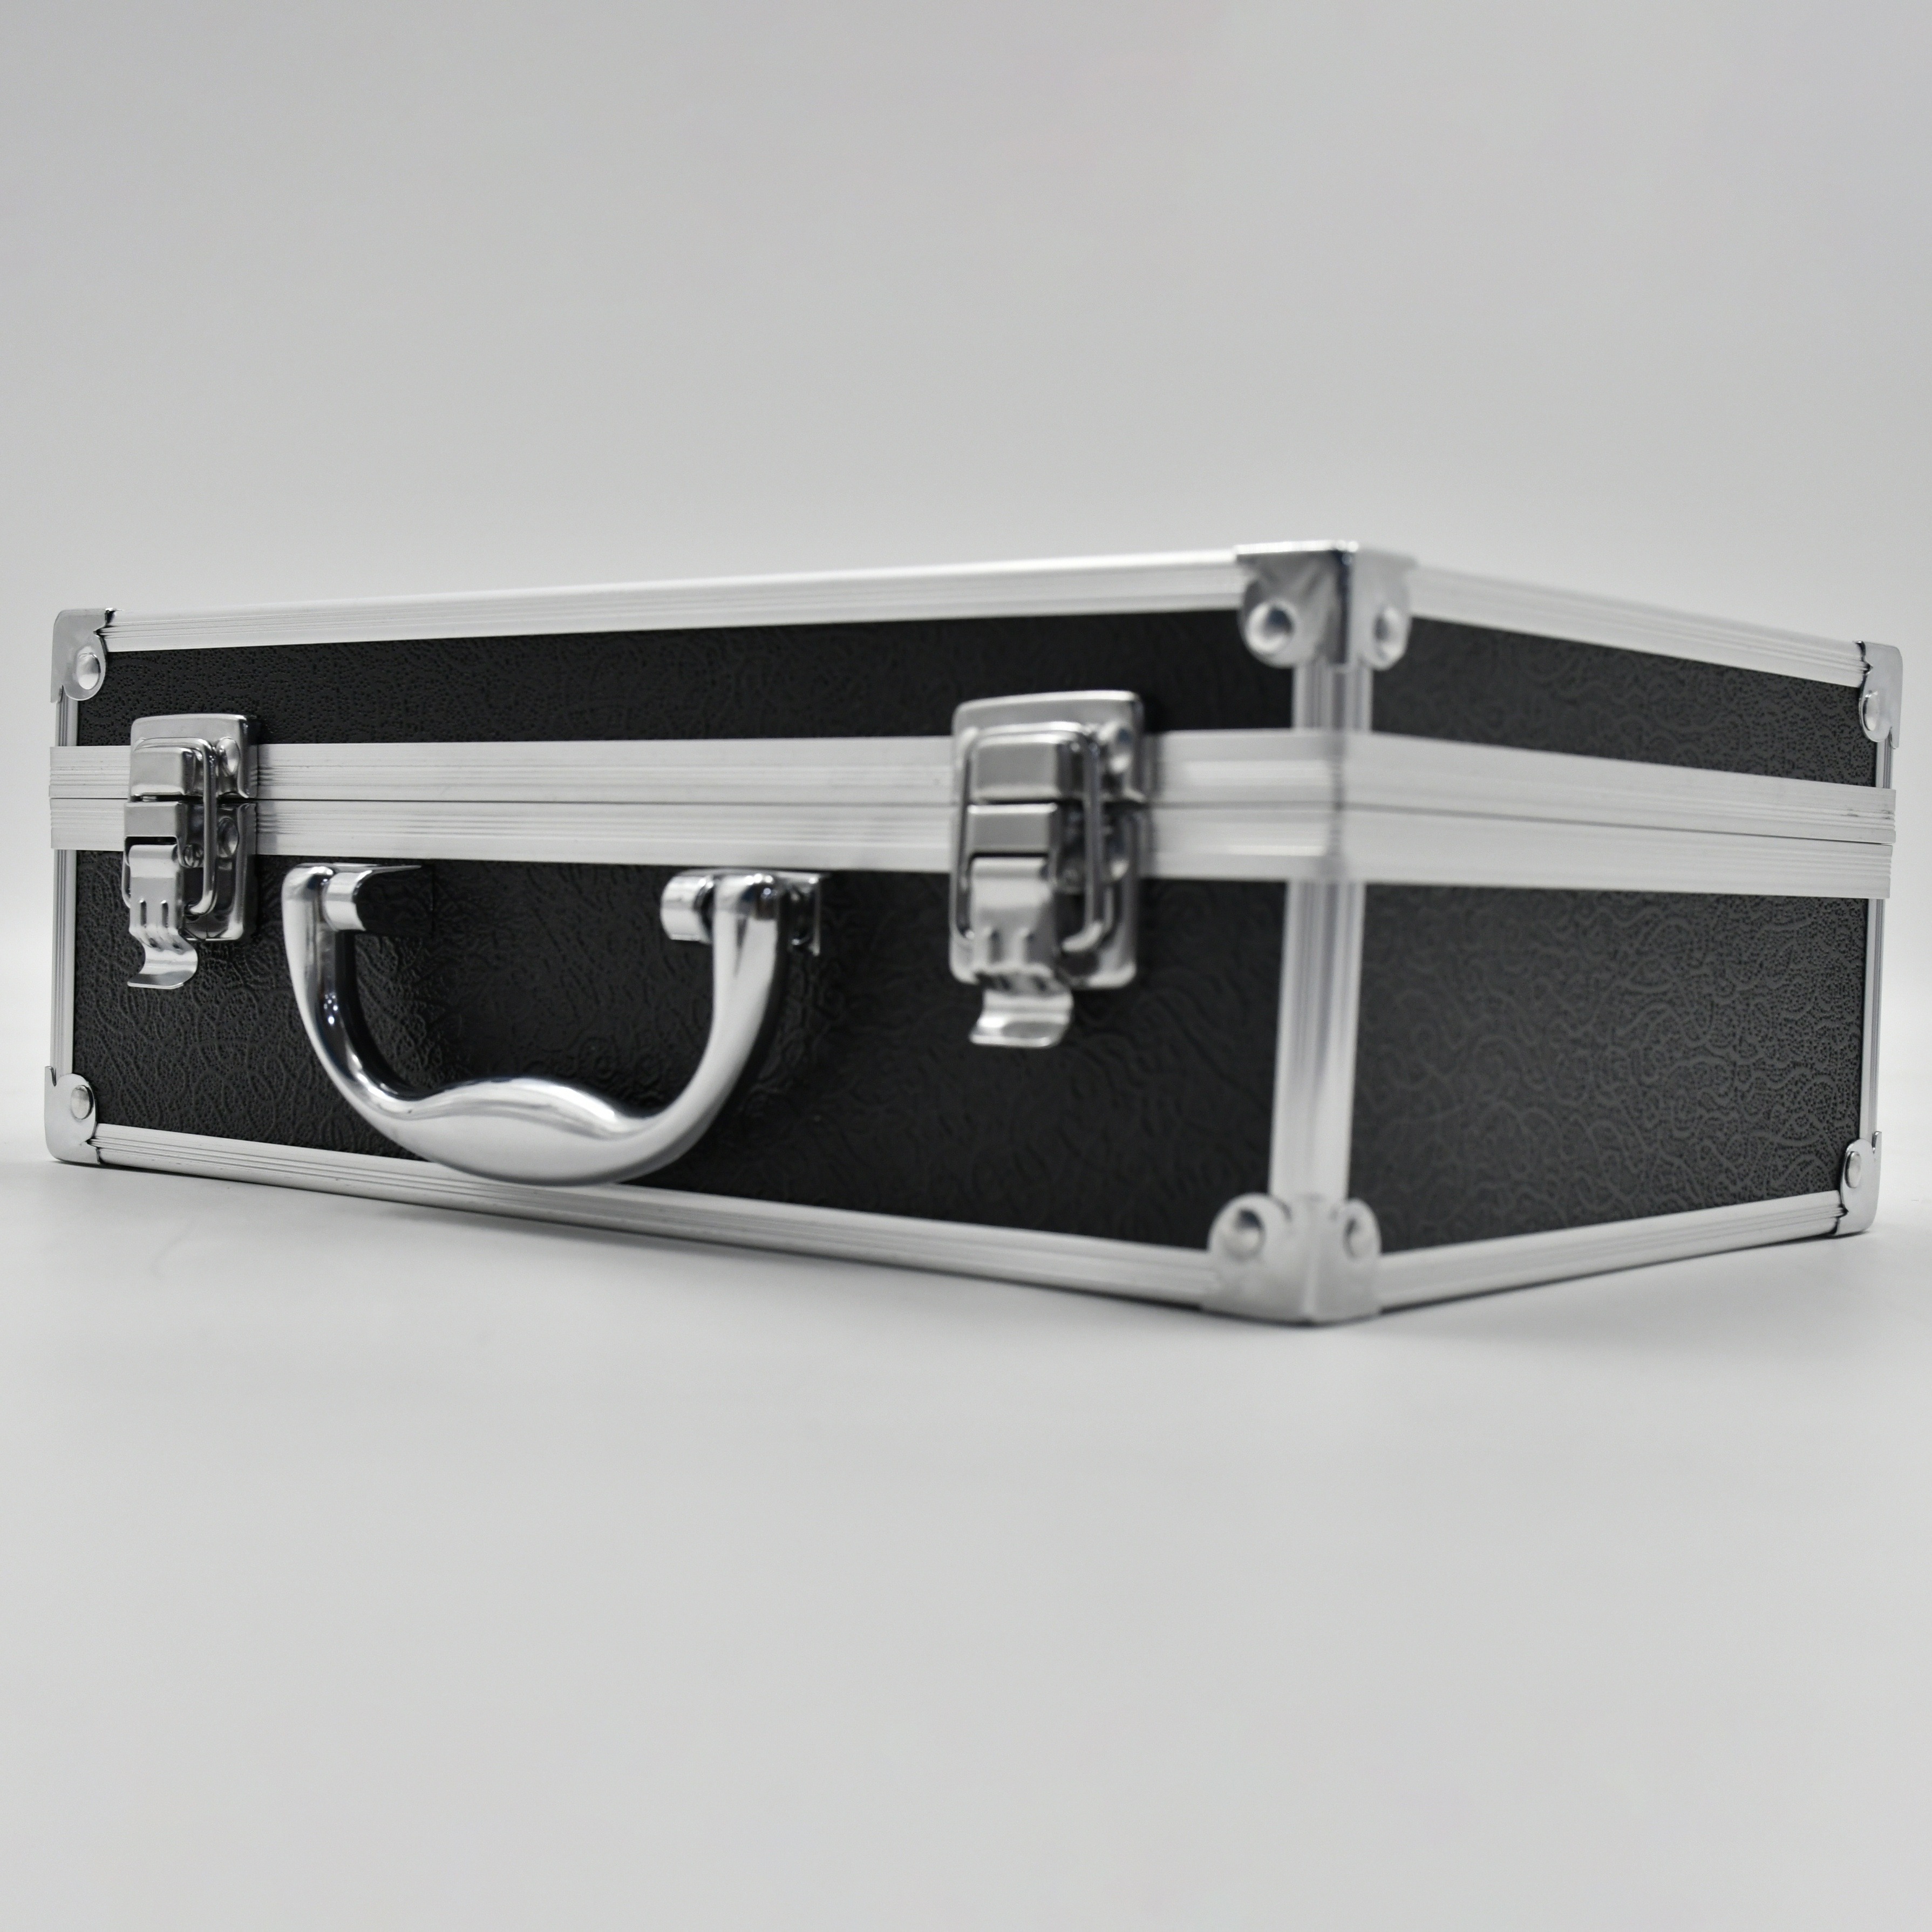 

Small Metal Tool Box, Tool Case Aluminum Tools Case Cash Box, Travel Makeup Bag. Suitcase Box For Money, Jewelry, Makeup, Pill, Candy, Craft Organizer Black Metal Tool Box Aluminum Case